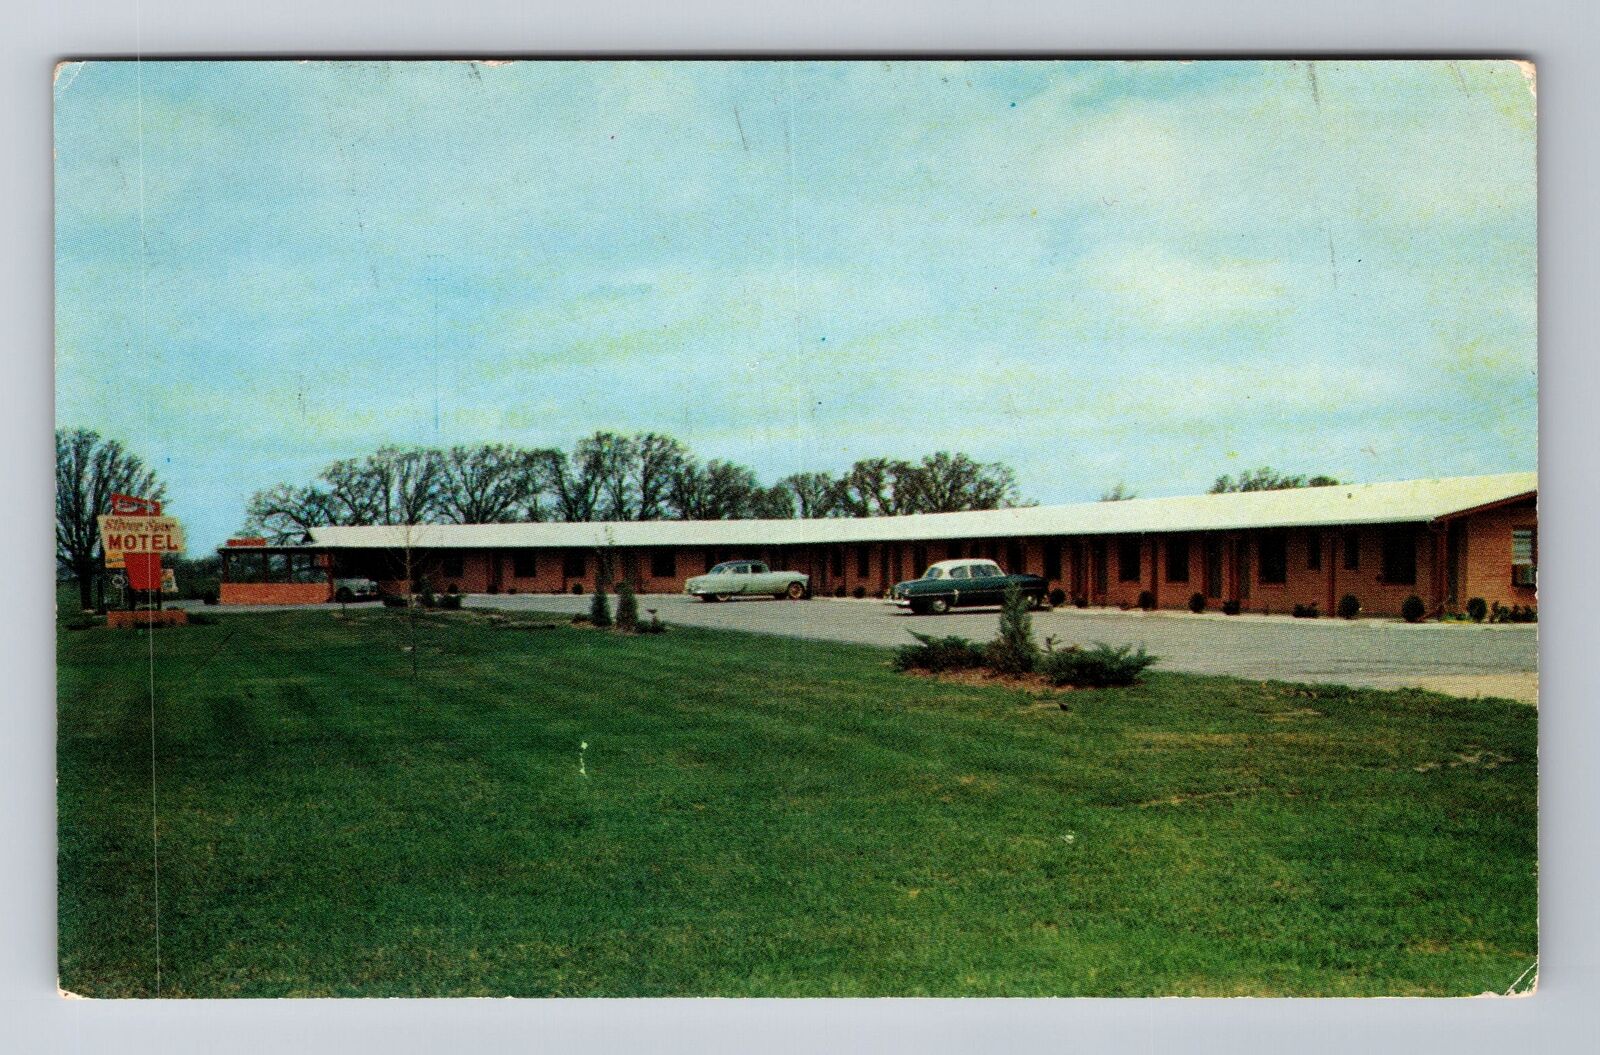 Greenville TX-Texas, Silver Spur Motel, Advertising, Vintage Souvenir Postcard